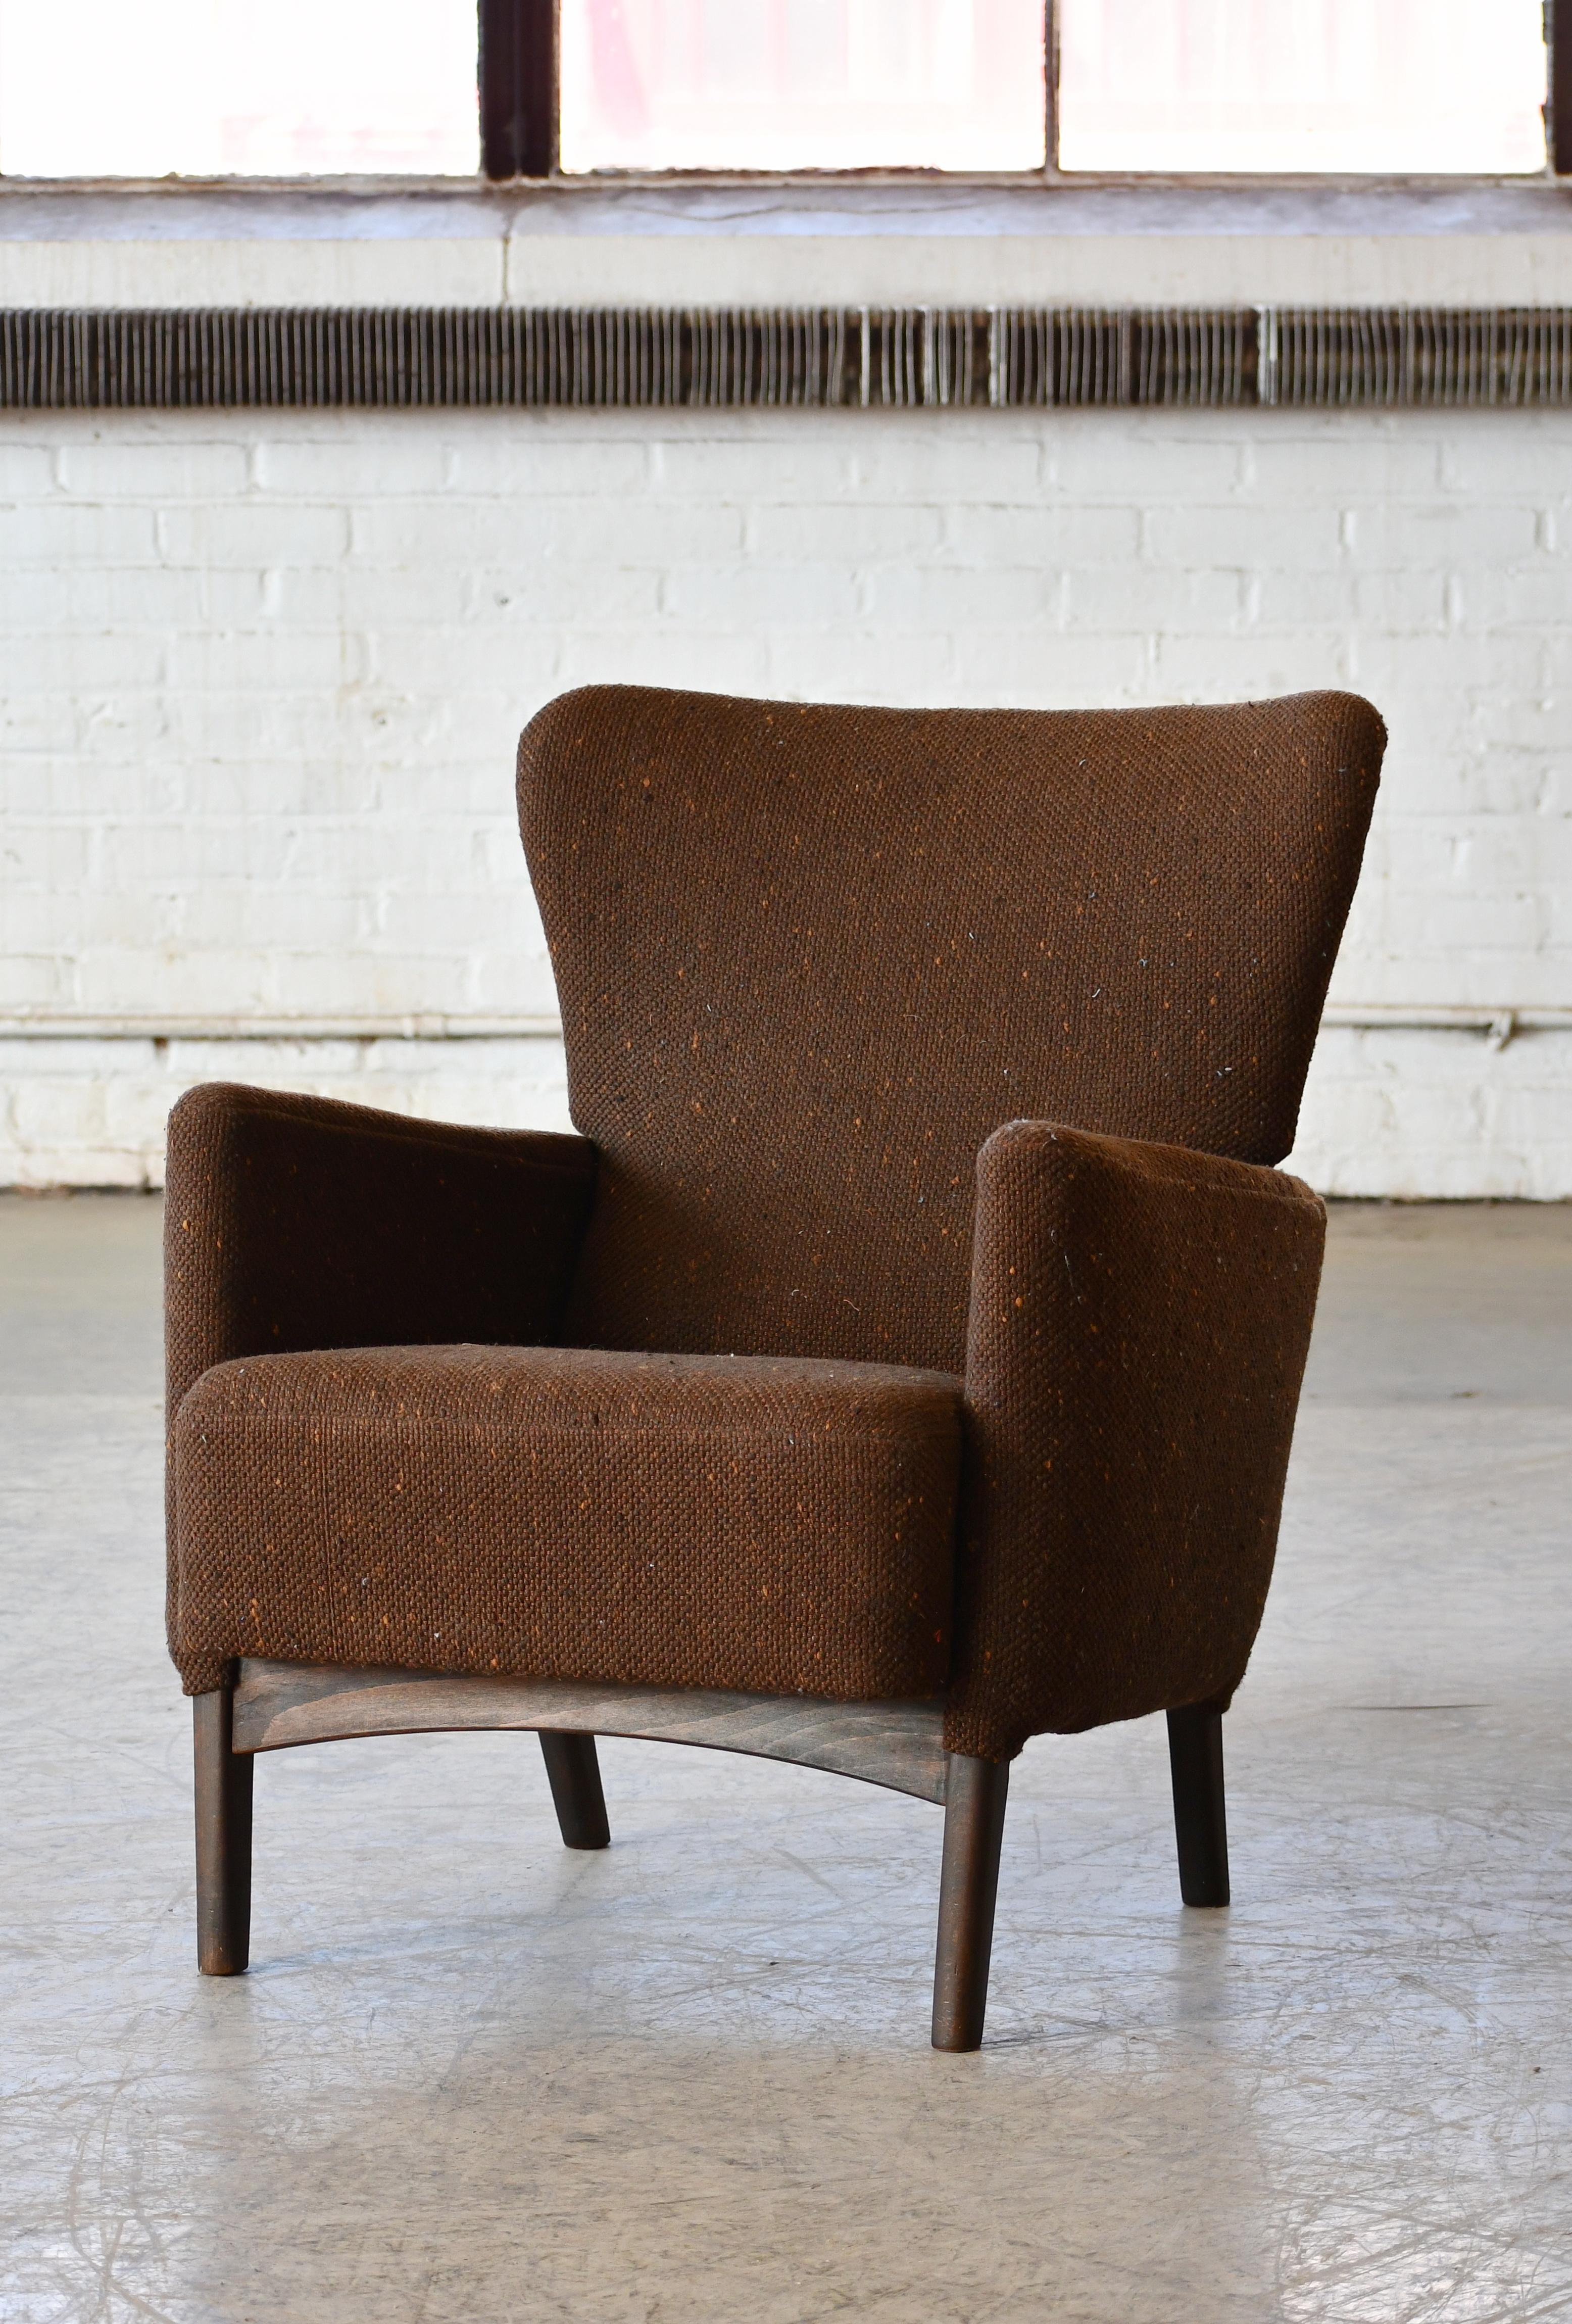 Scandinavian Modern Low Back Lounge Chair by Fritz Hansen, Denmark 1950's